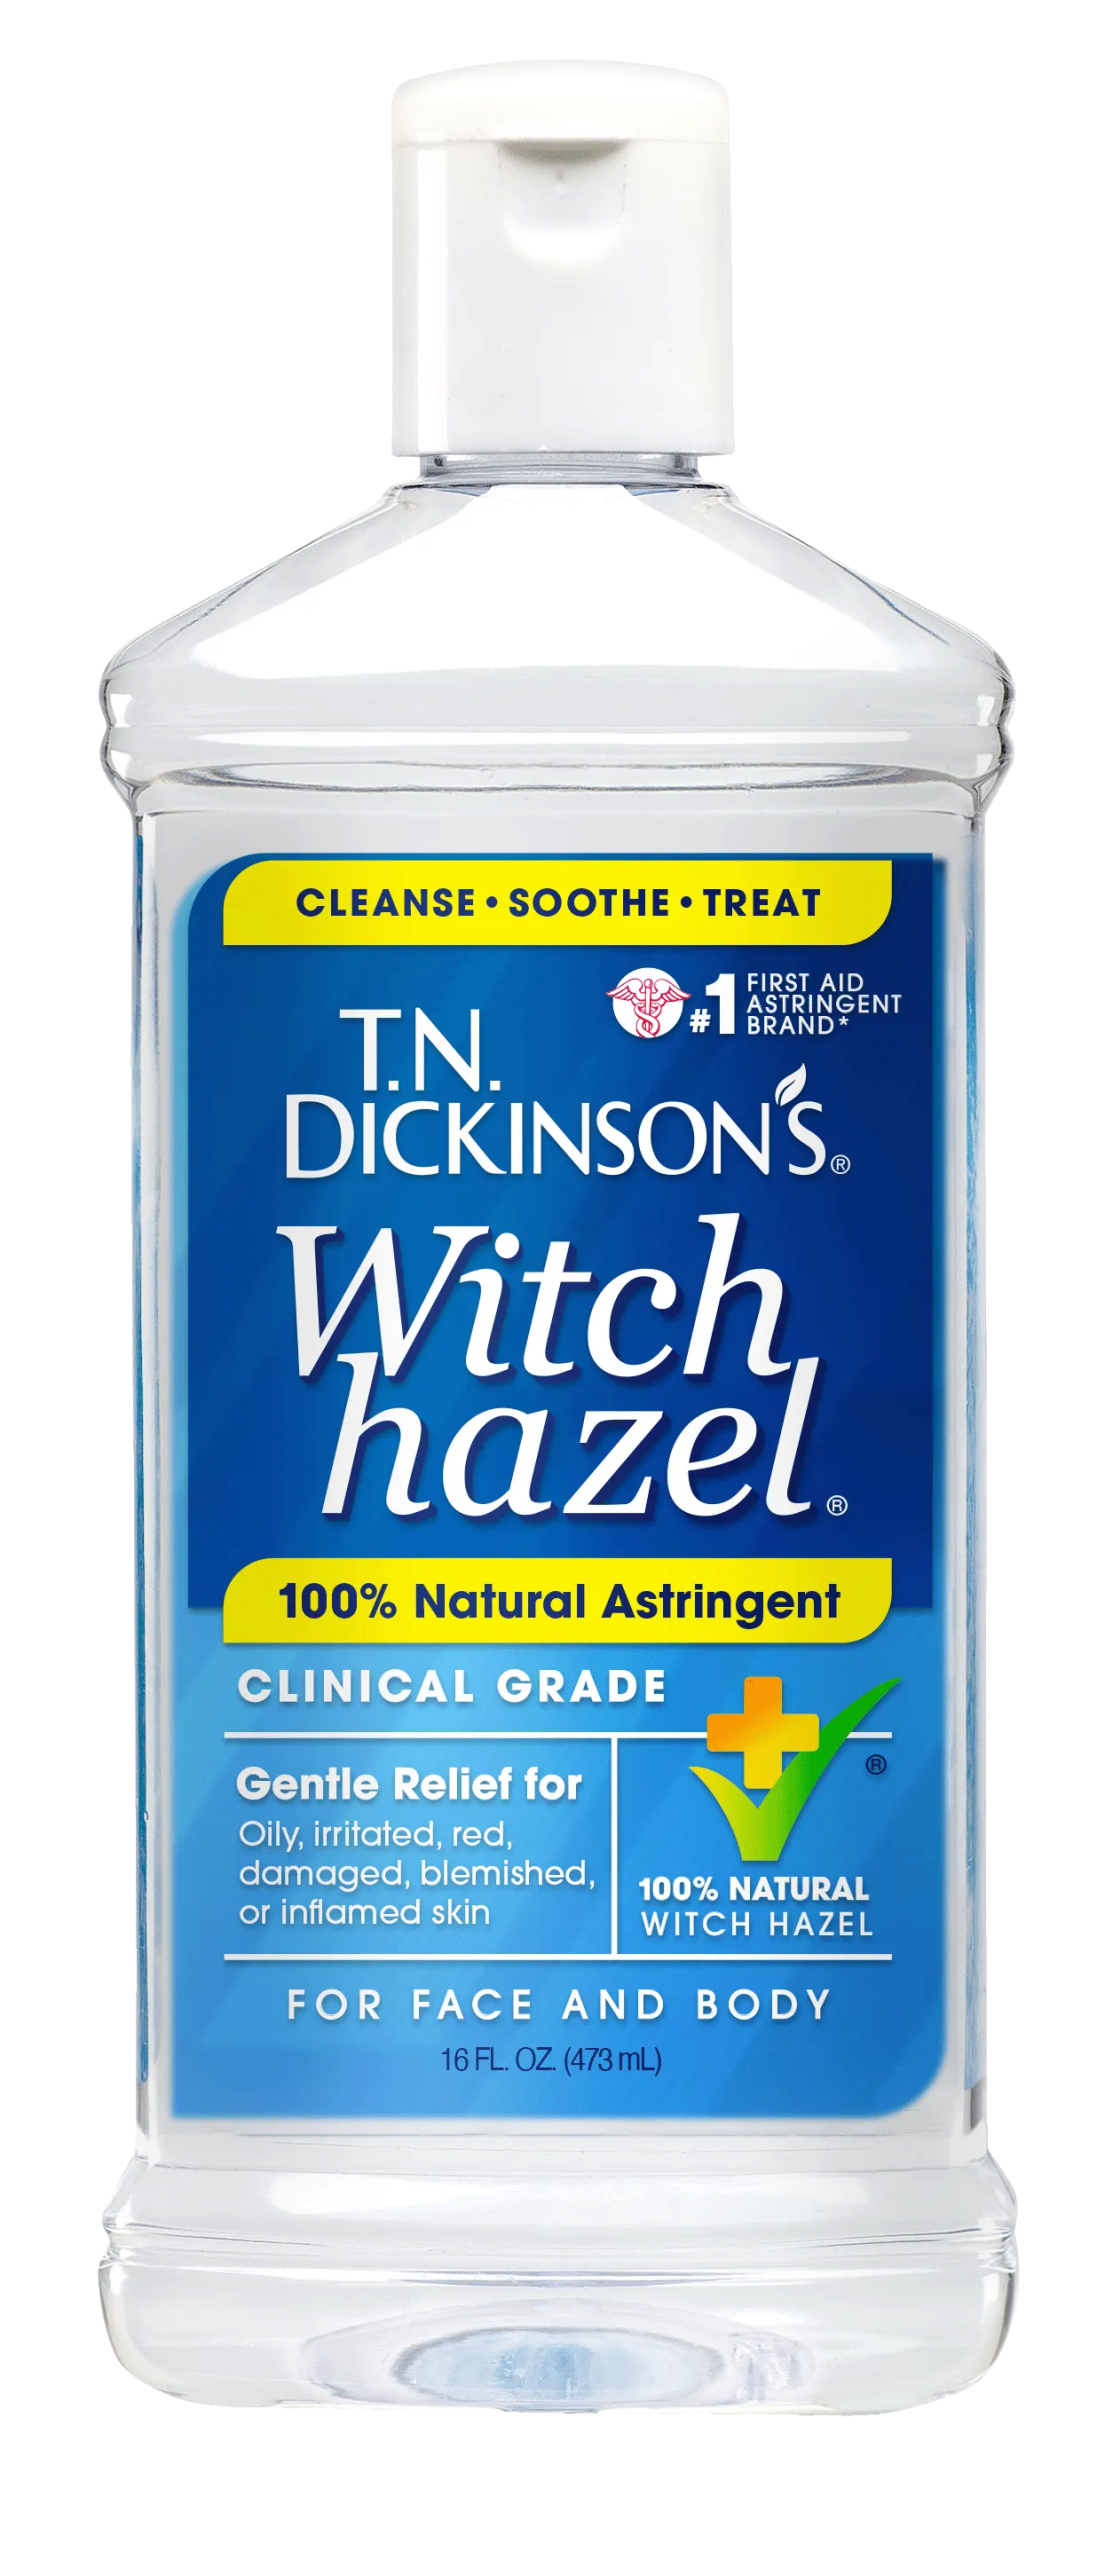 T. N. Dickinson’s witch hazel